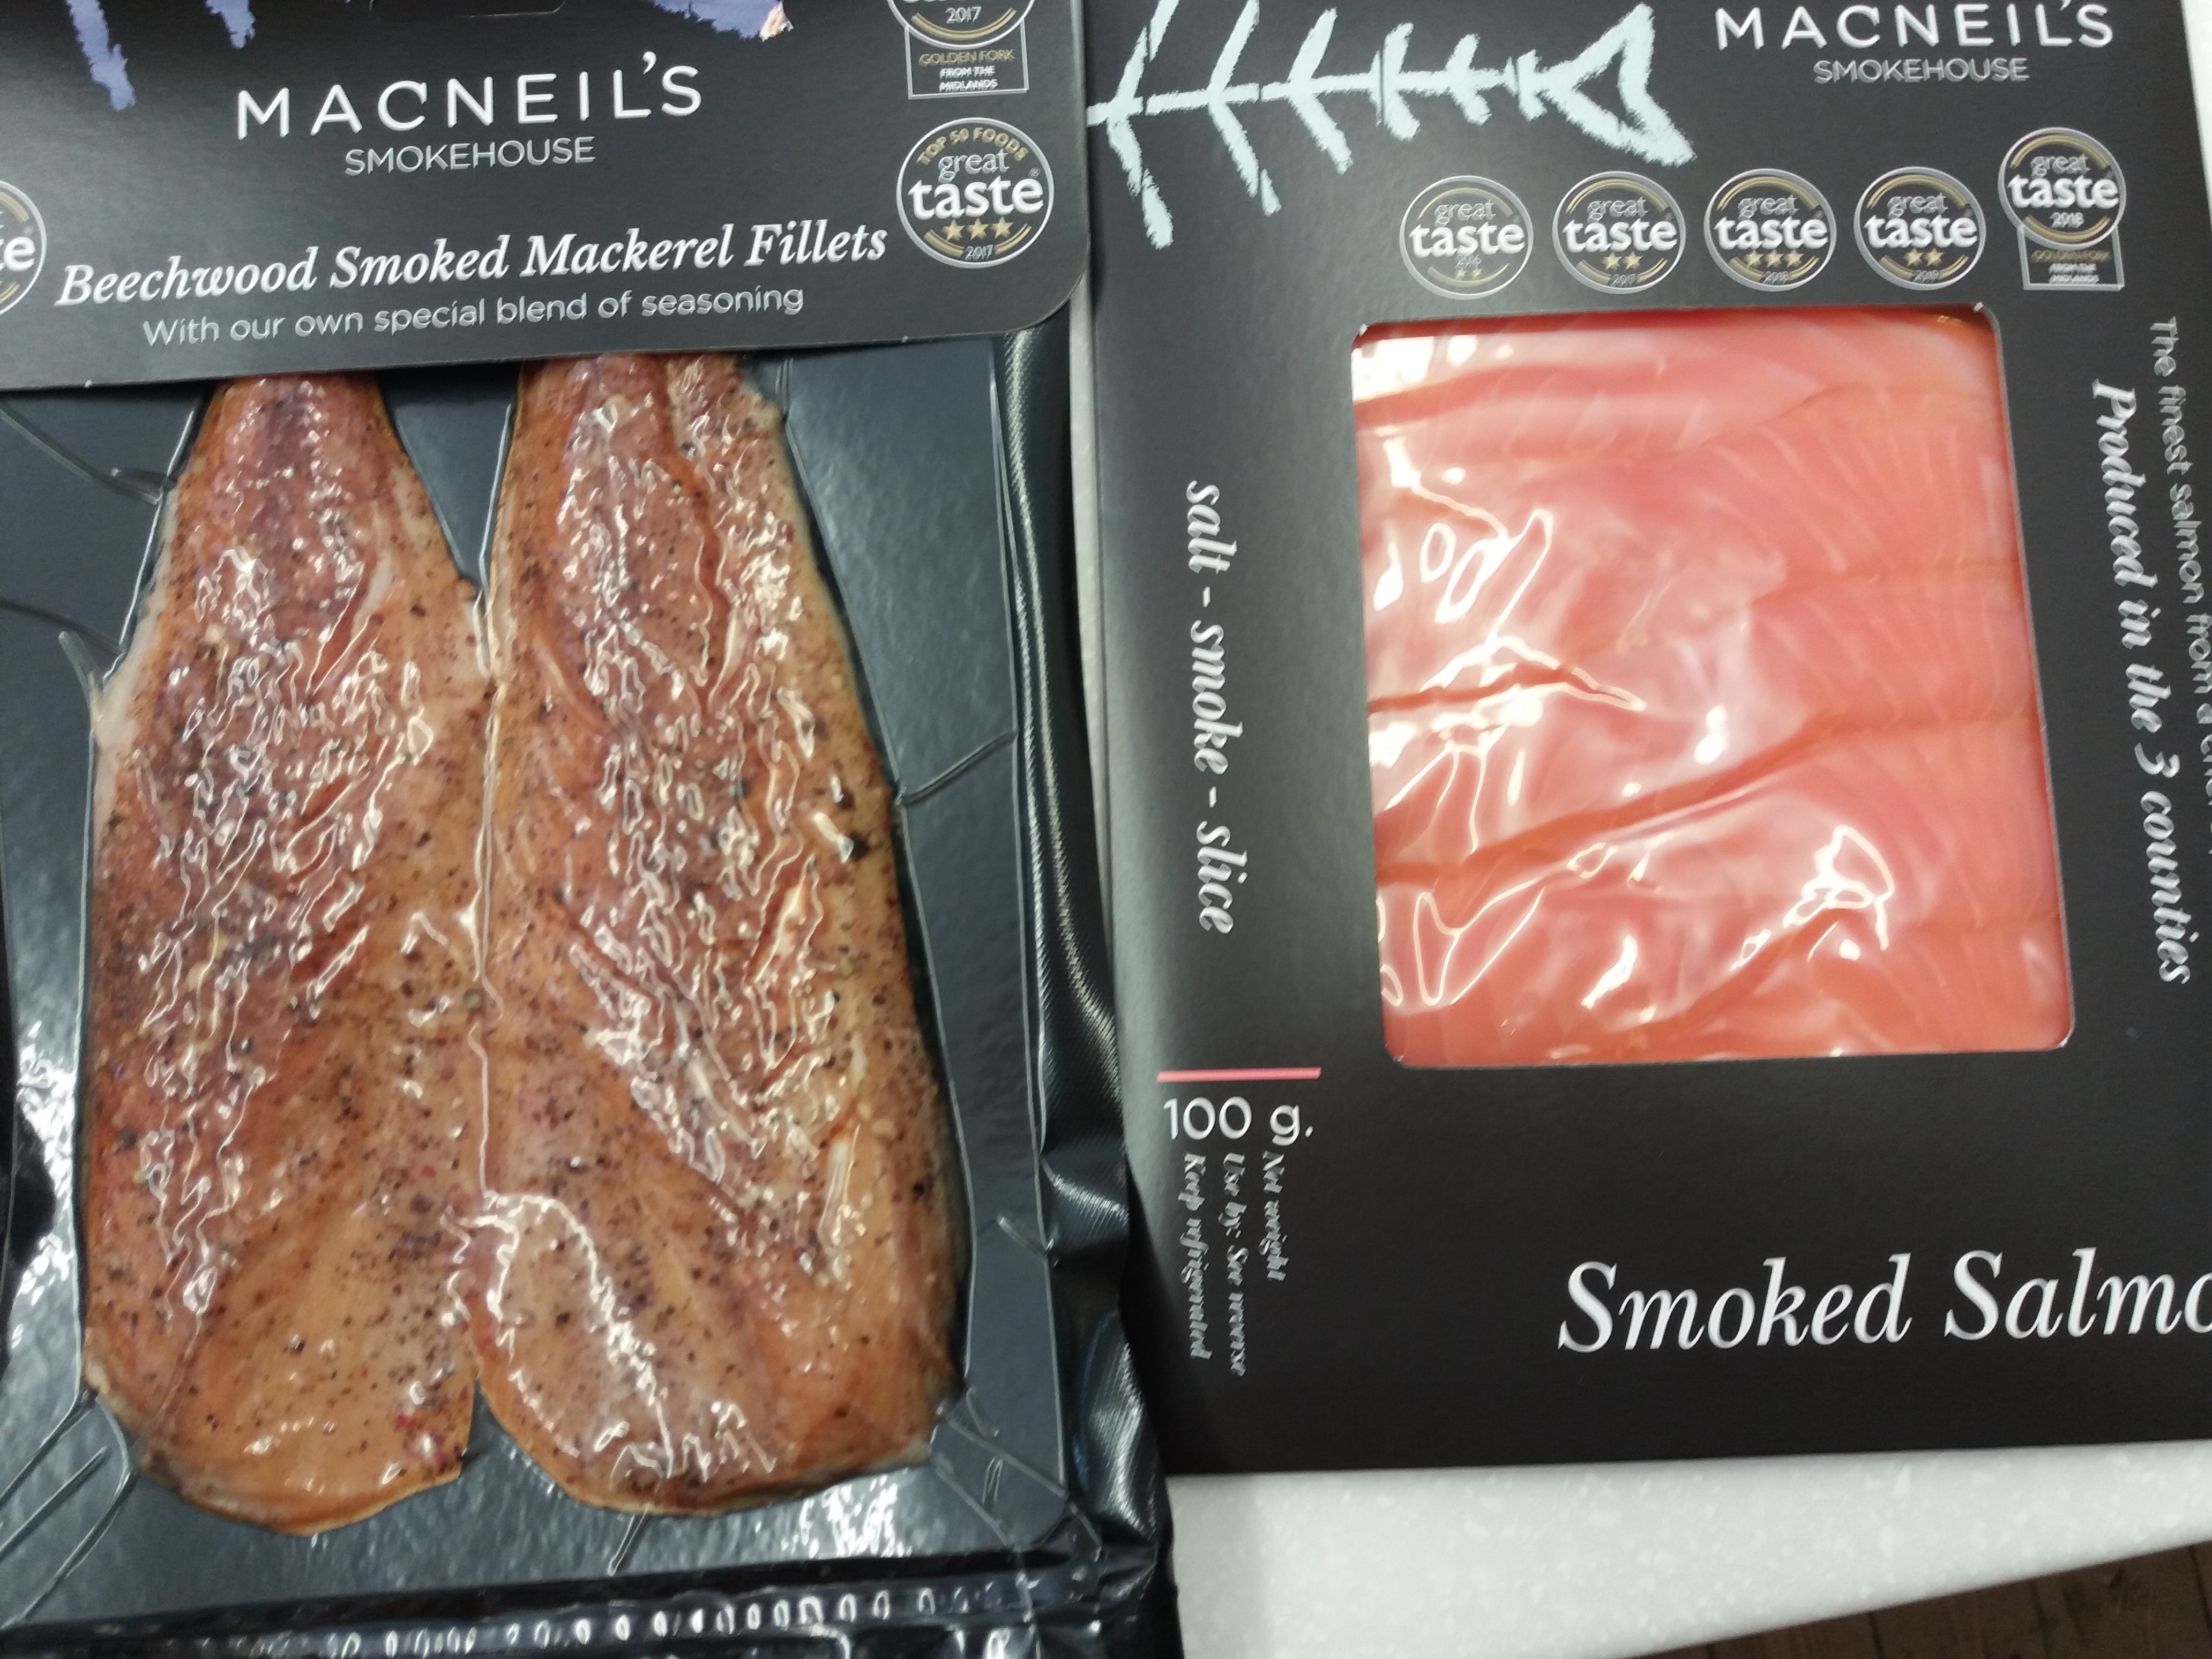 A photo shpwing packets of Macneil's smoked salmon and smoked mackerel